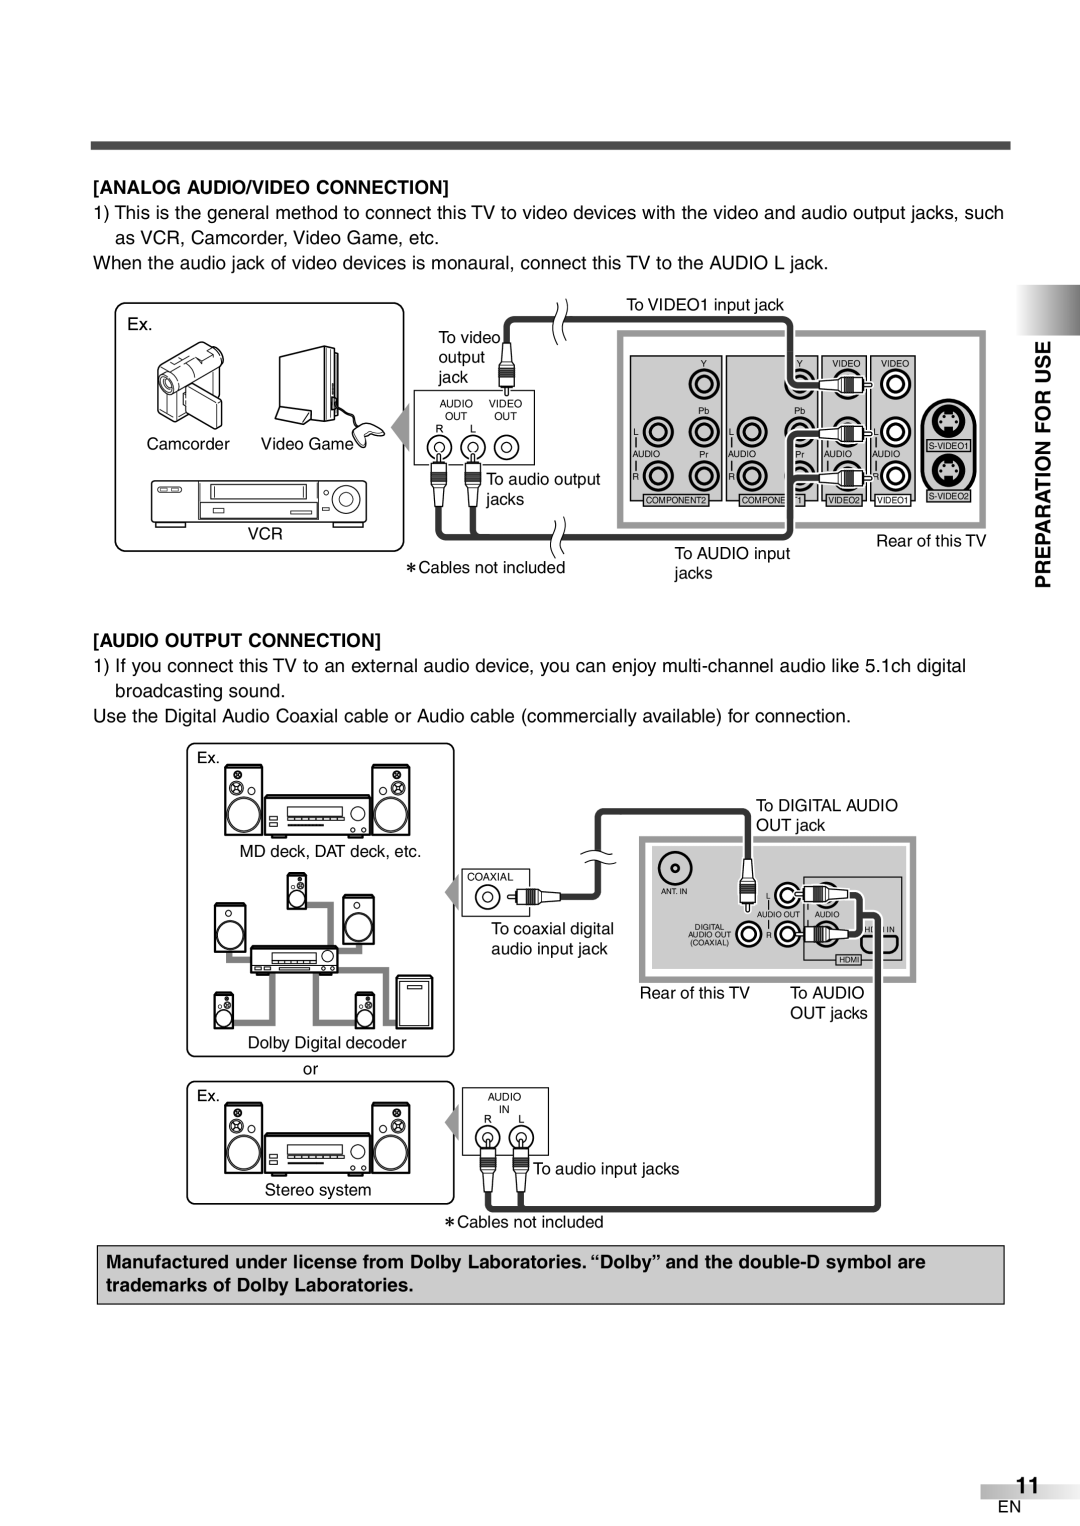 Symphonic WF32L6 owner manual Analog Audio/Video Connection, Audio Output Connection, jacks 